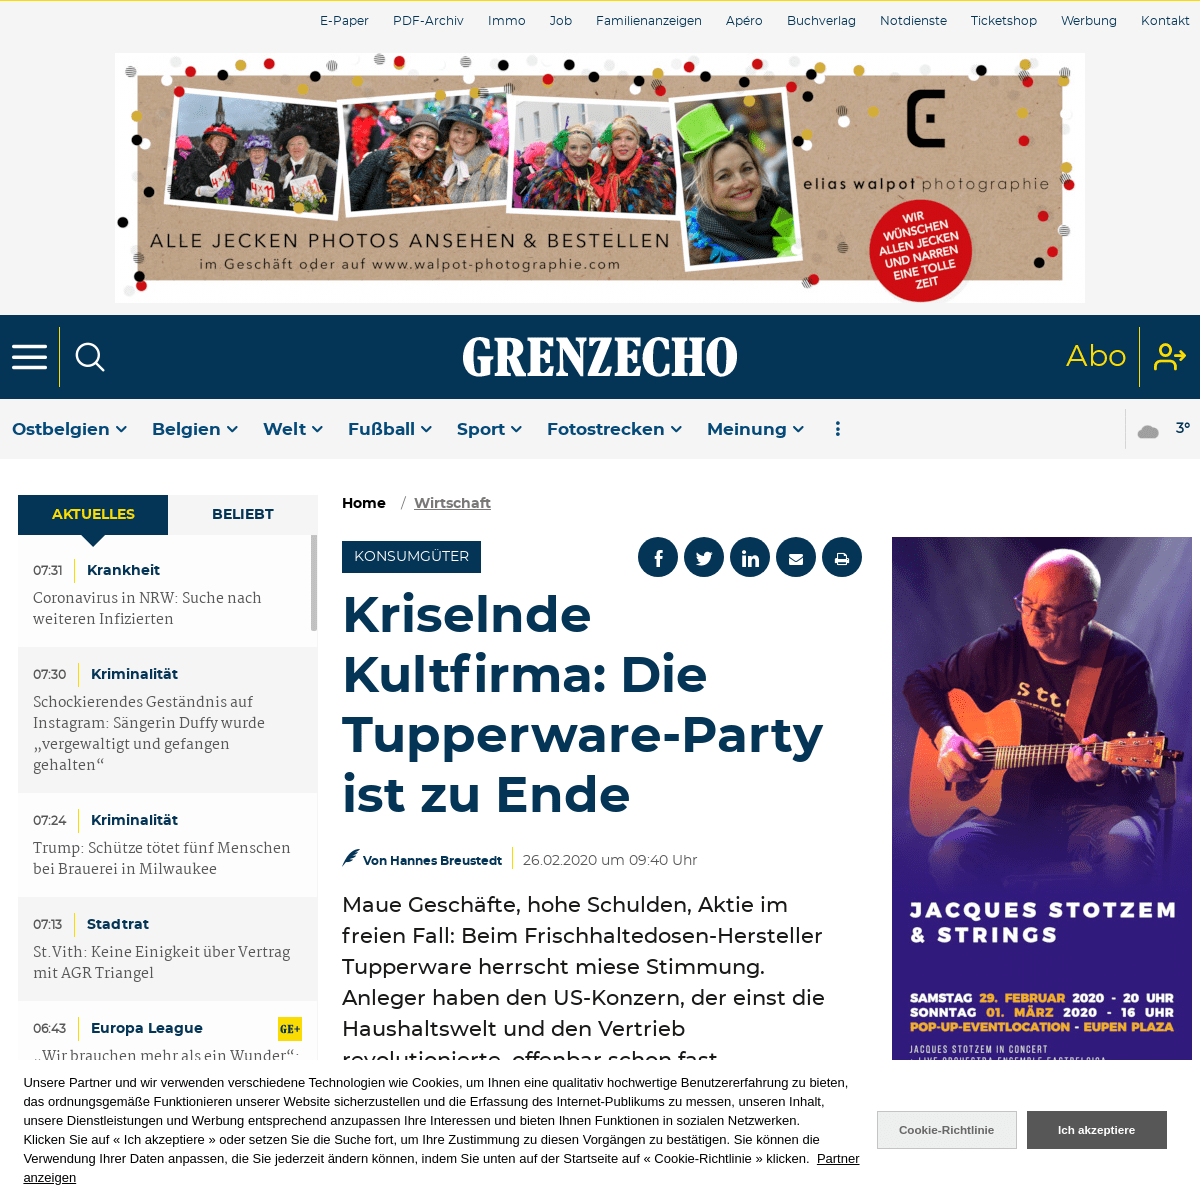 A complete backup of www.grenzecho.net/31852/artikel/2020-02-26/kriselnde-kultfirma-die-tupperware-party-ist-zu-ende